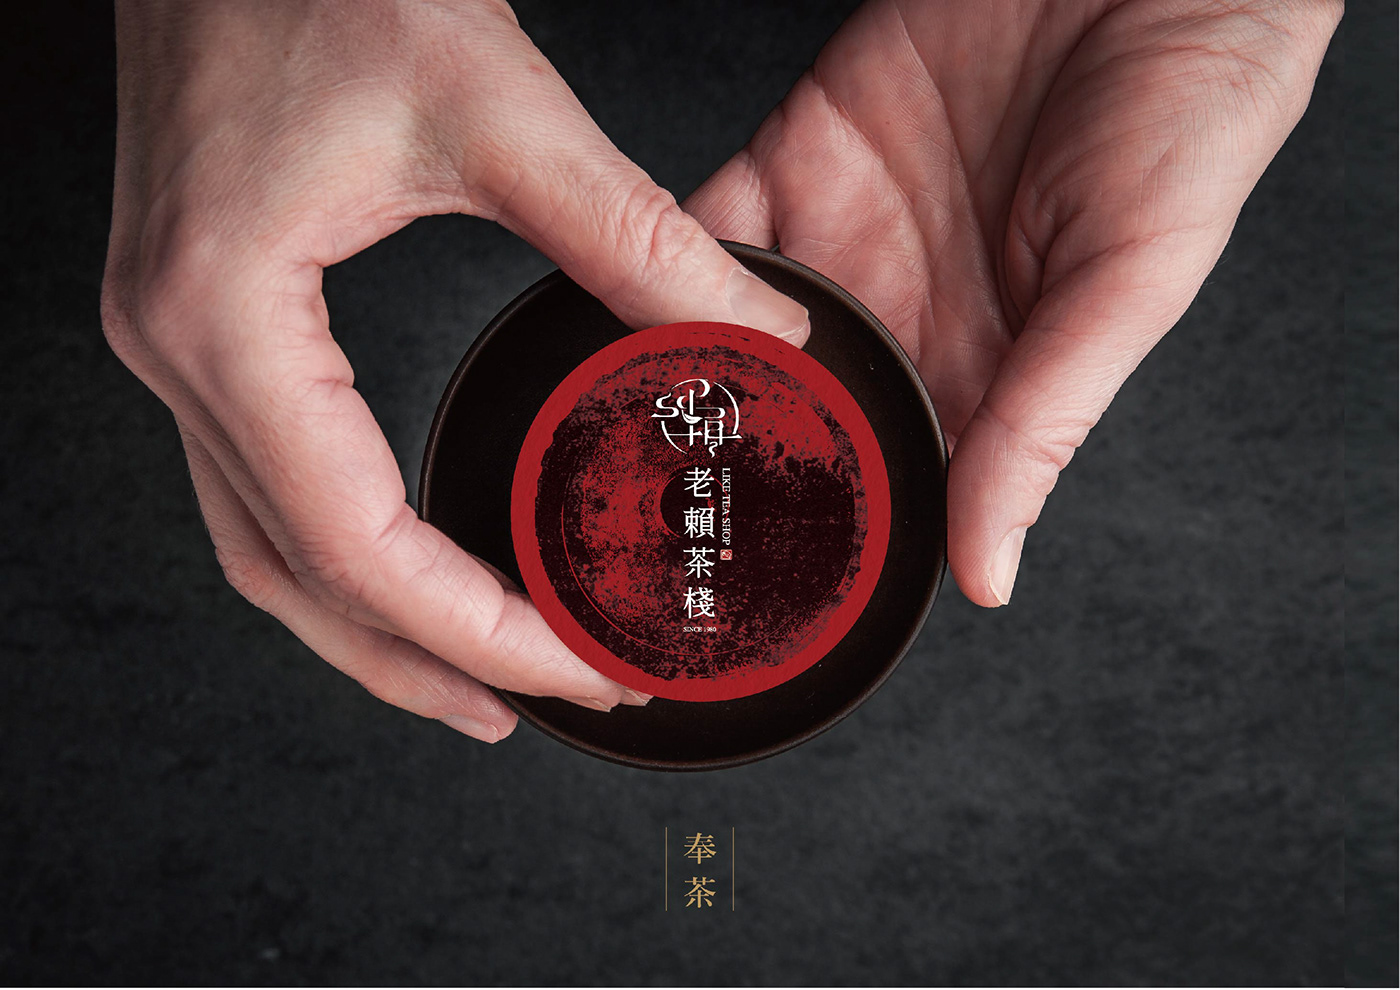 CIS VI logo tea brand identity menu chinese visual brand graphic